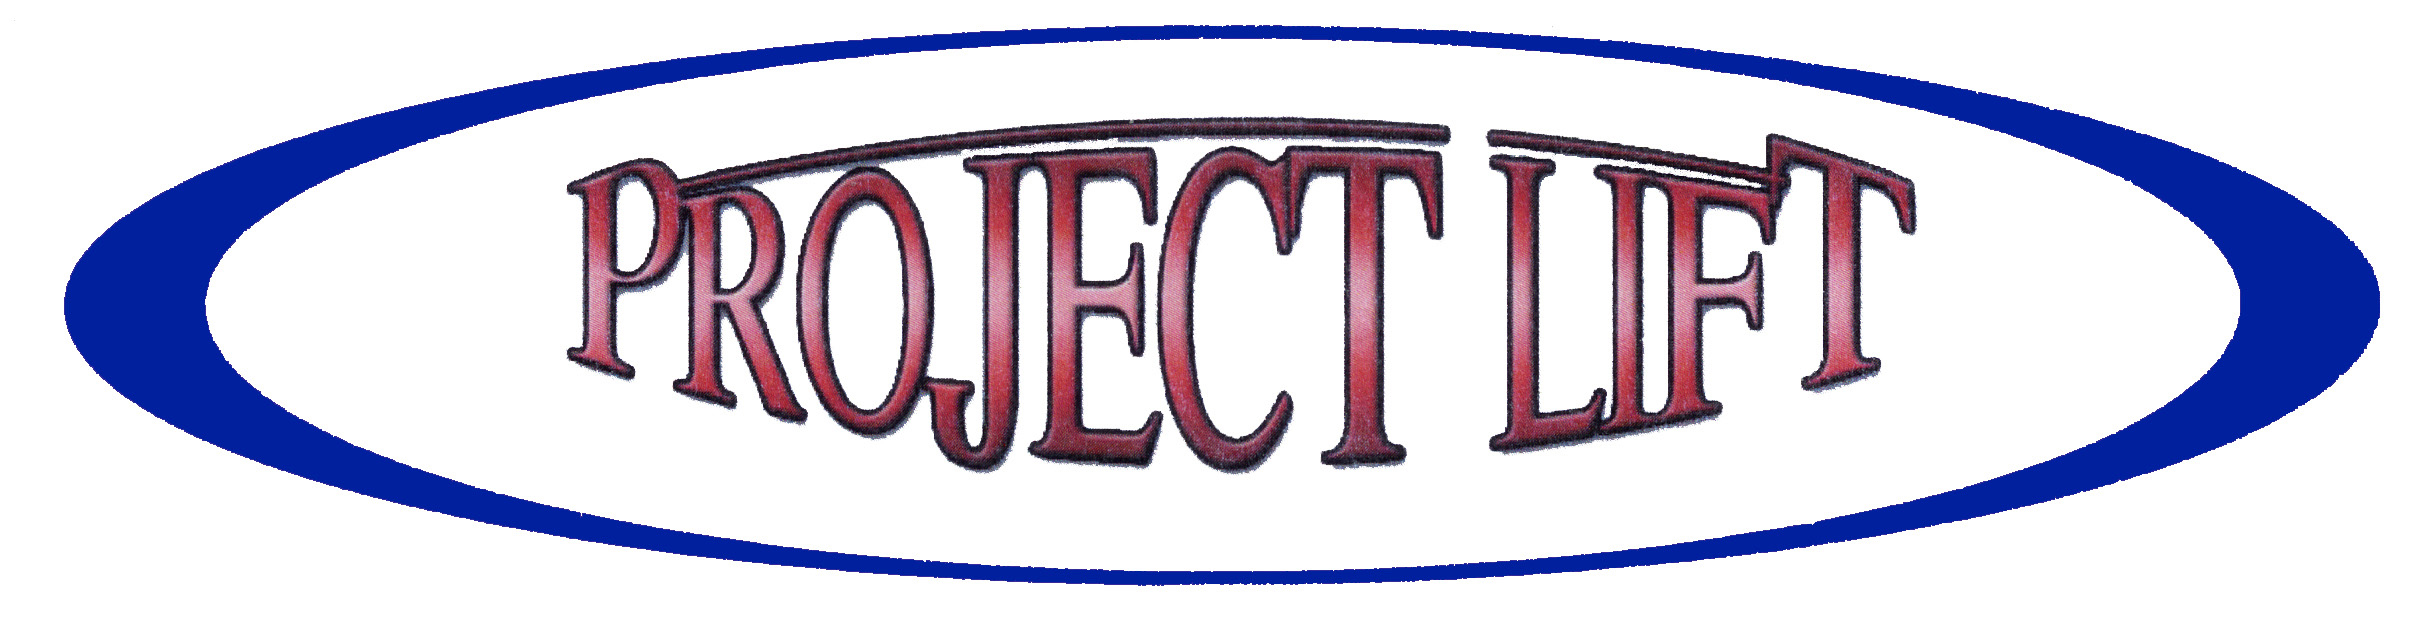 Project Lift Logo